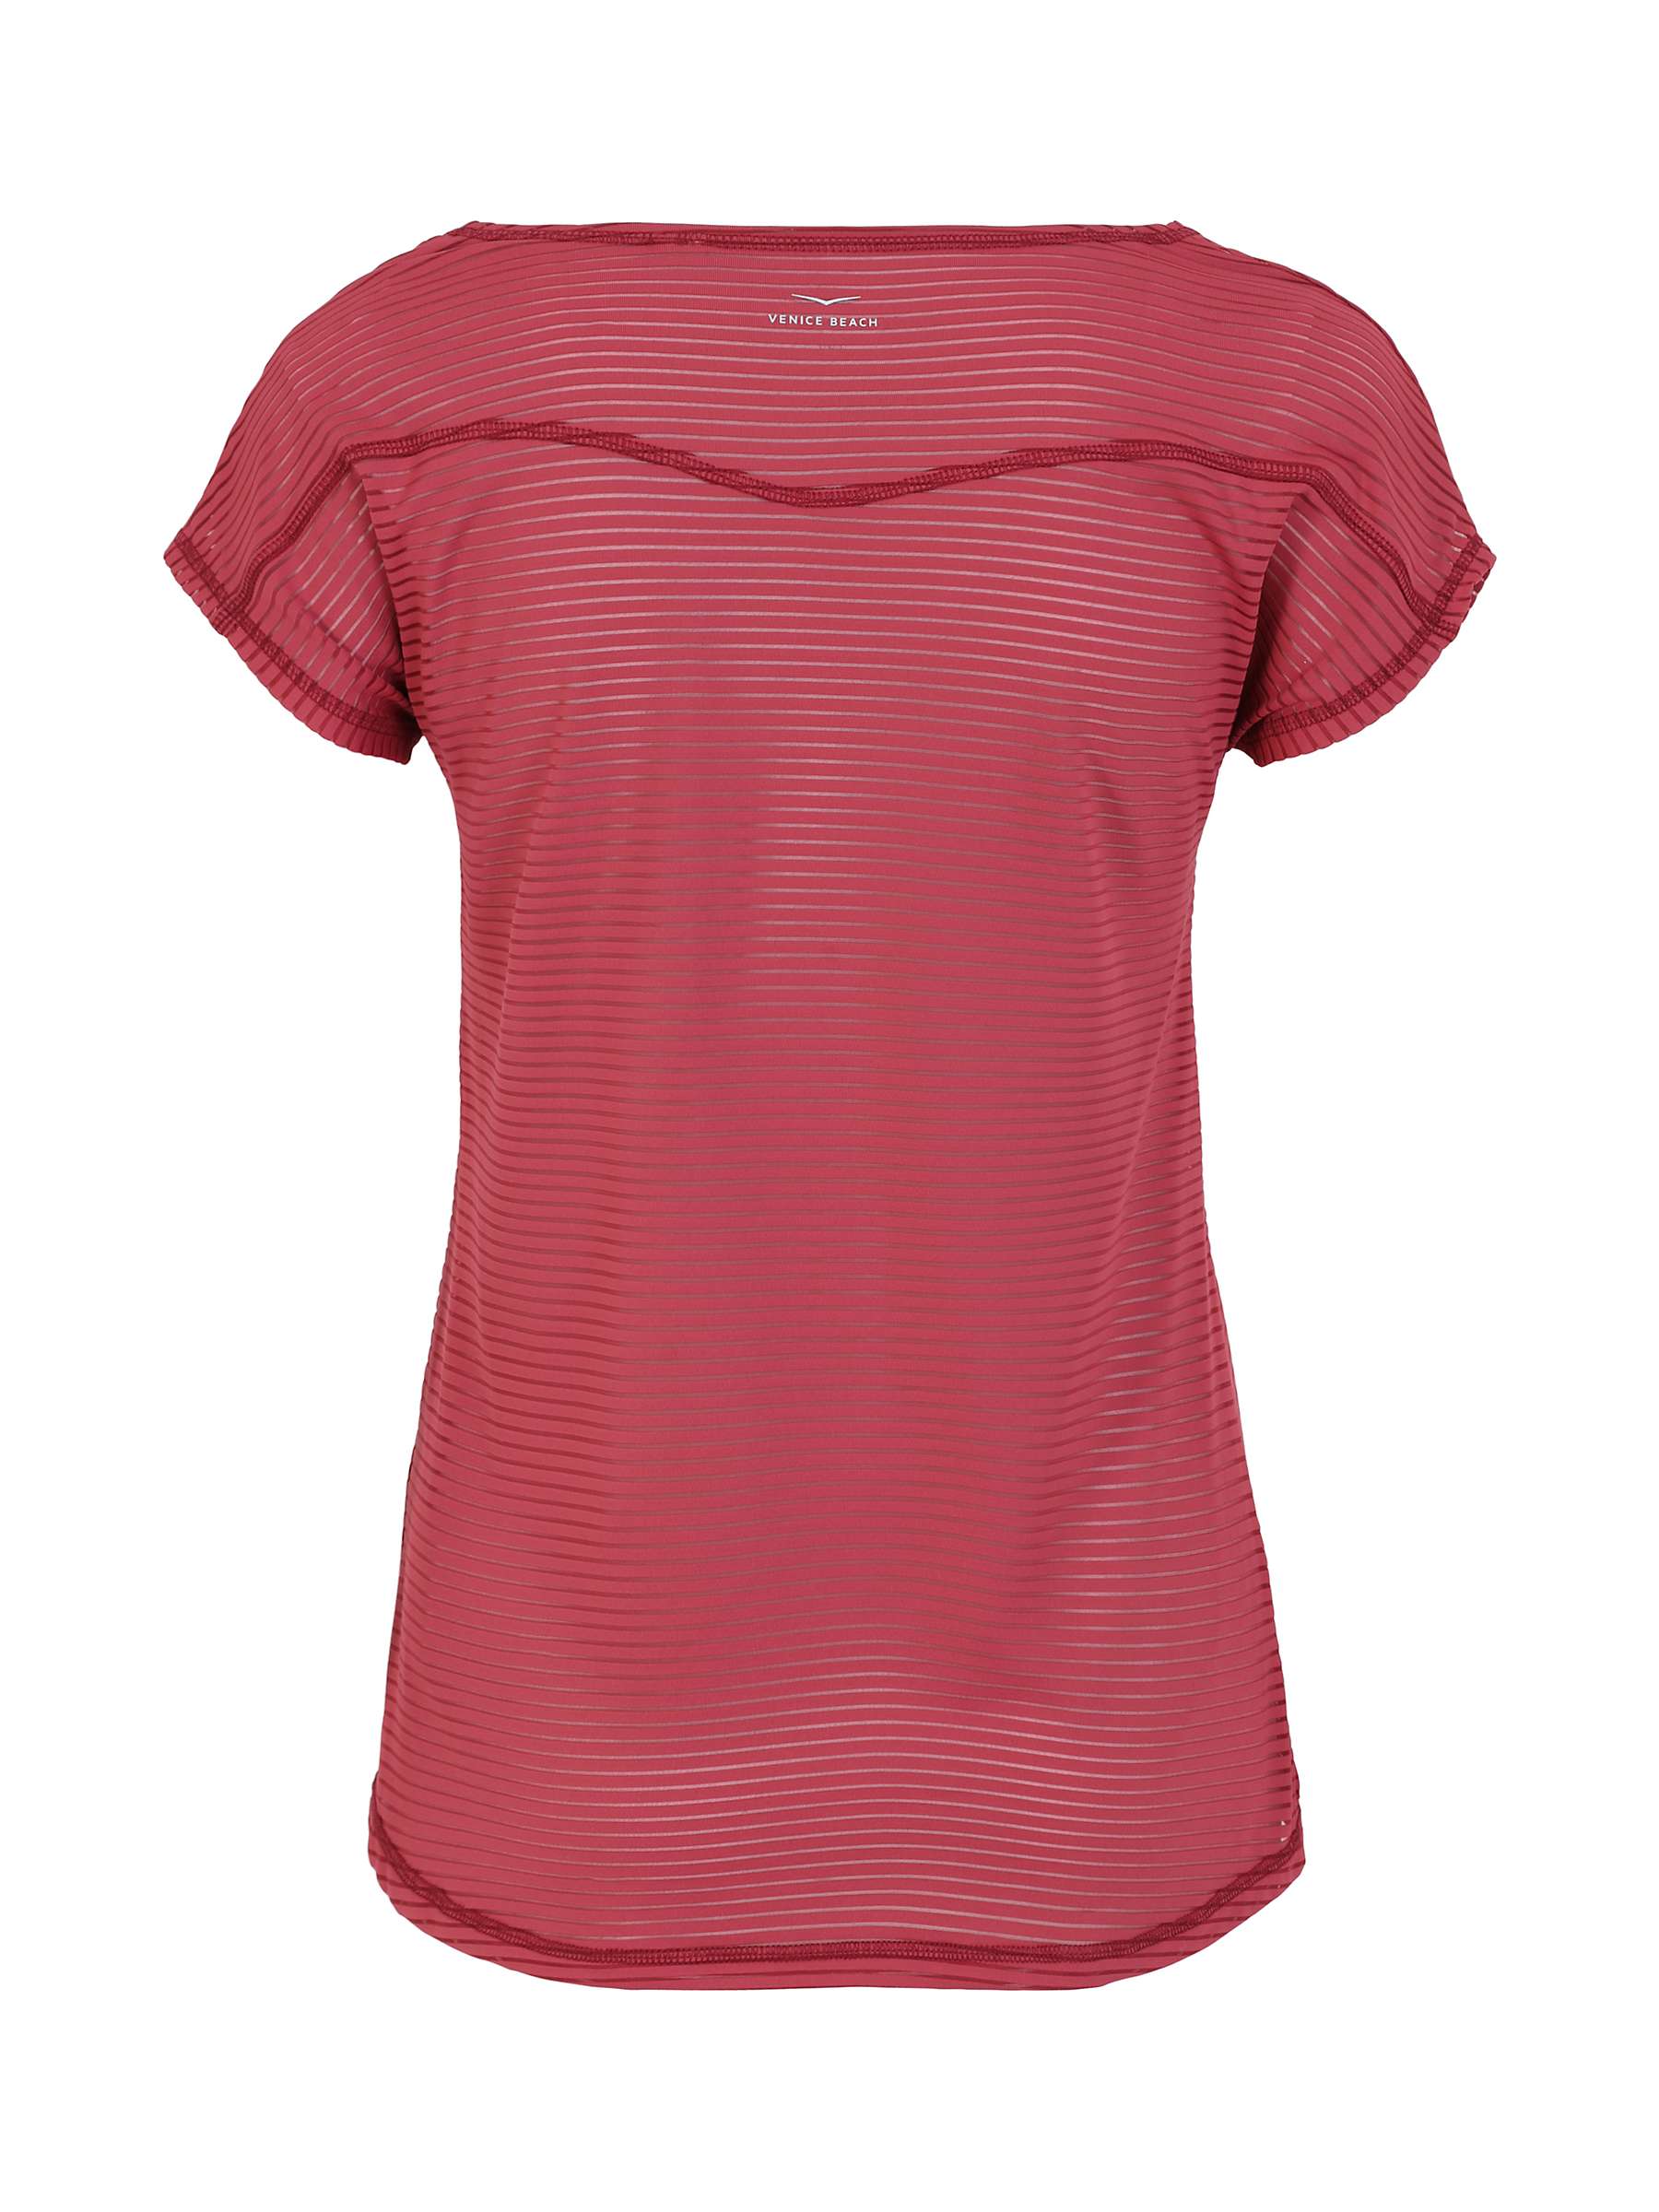 Buy Venice Beach Damaris Short Sleeve Gym Top, Deep Red Online at johnlewis.com